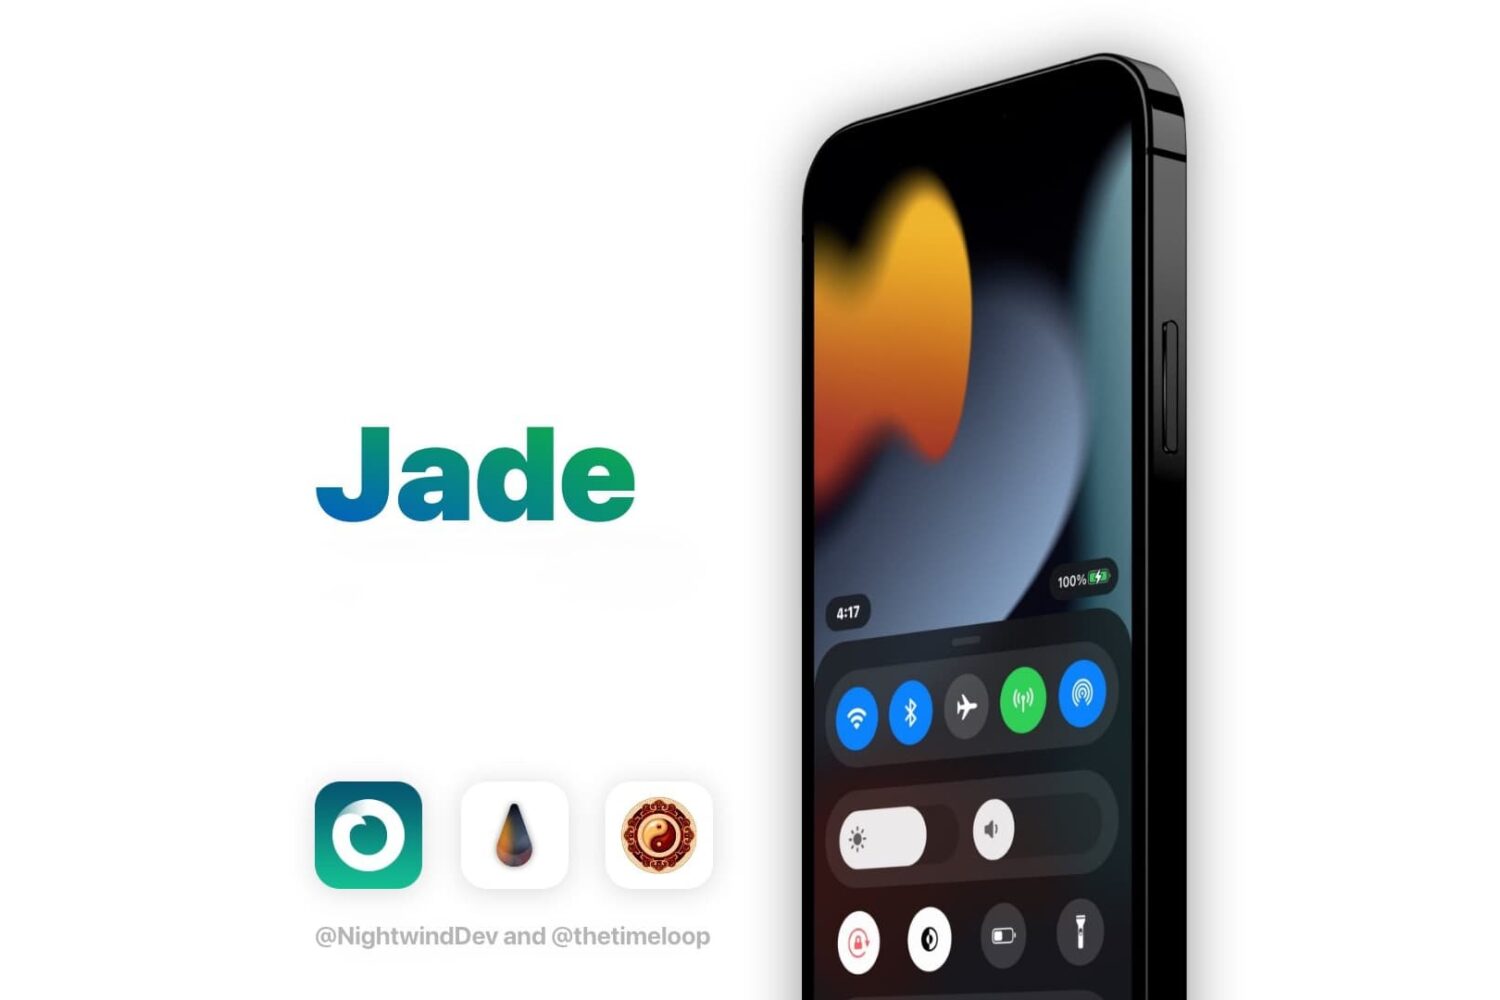 Jade banner image.